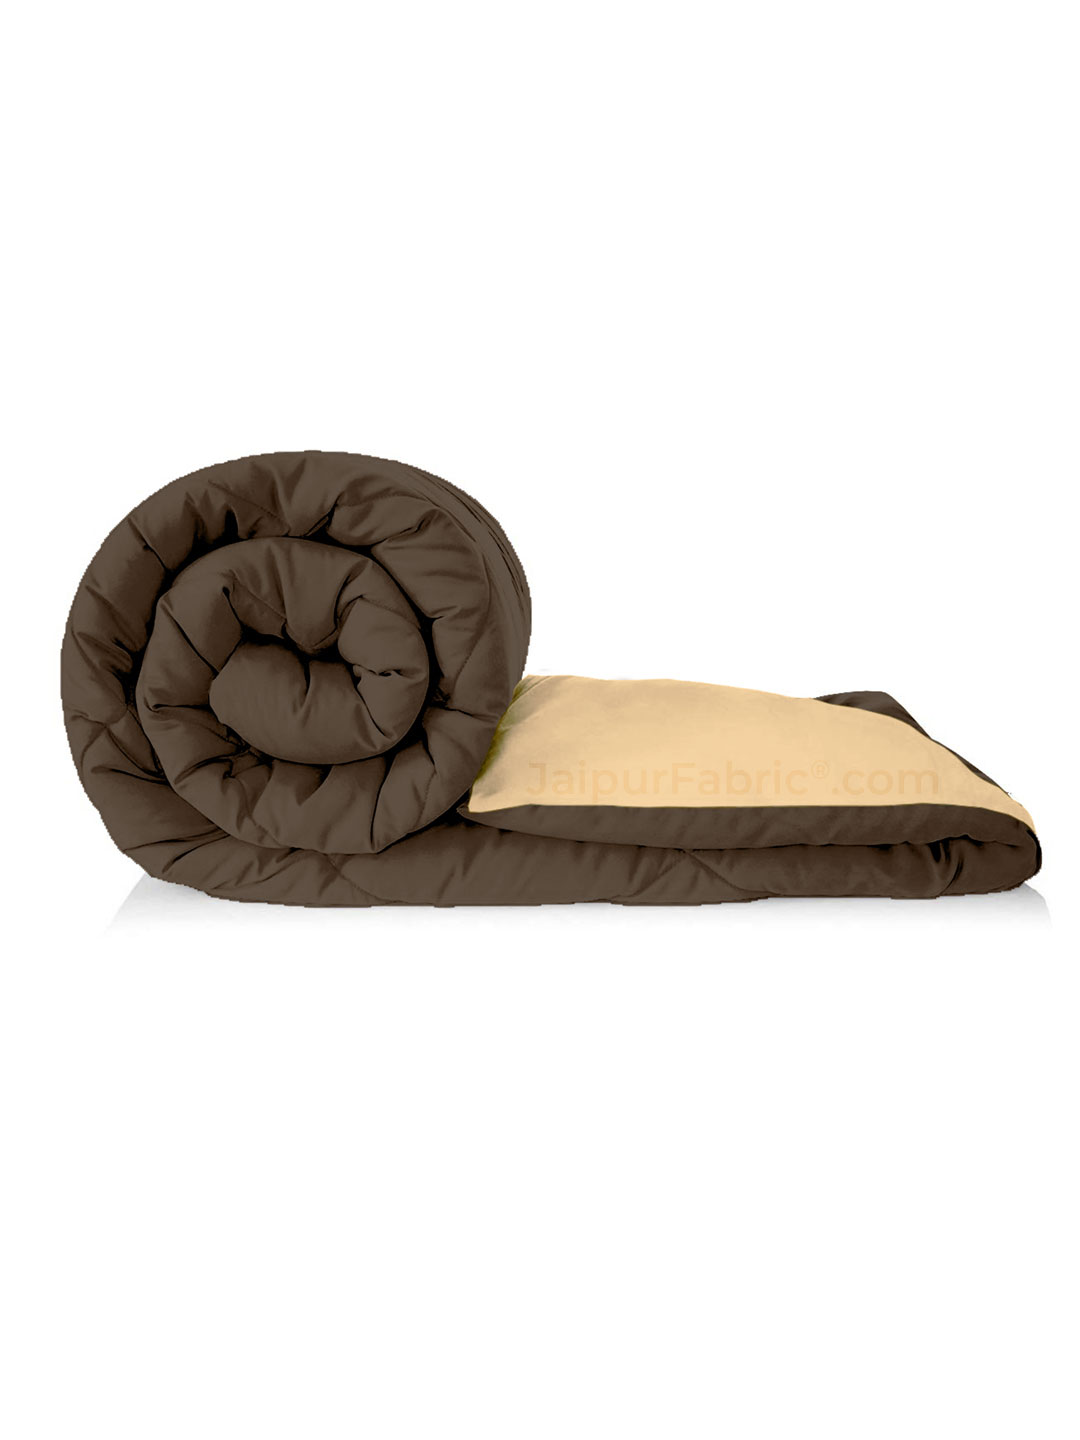 Off White Dark Brown Single Bed Comforter